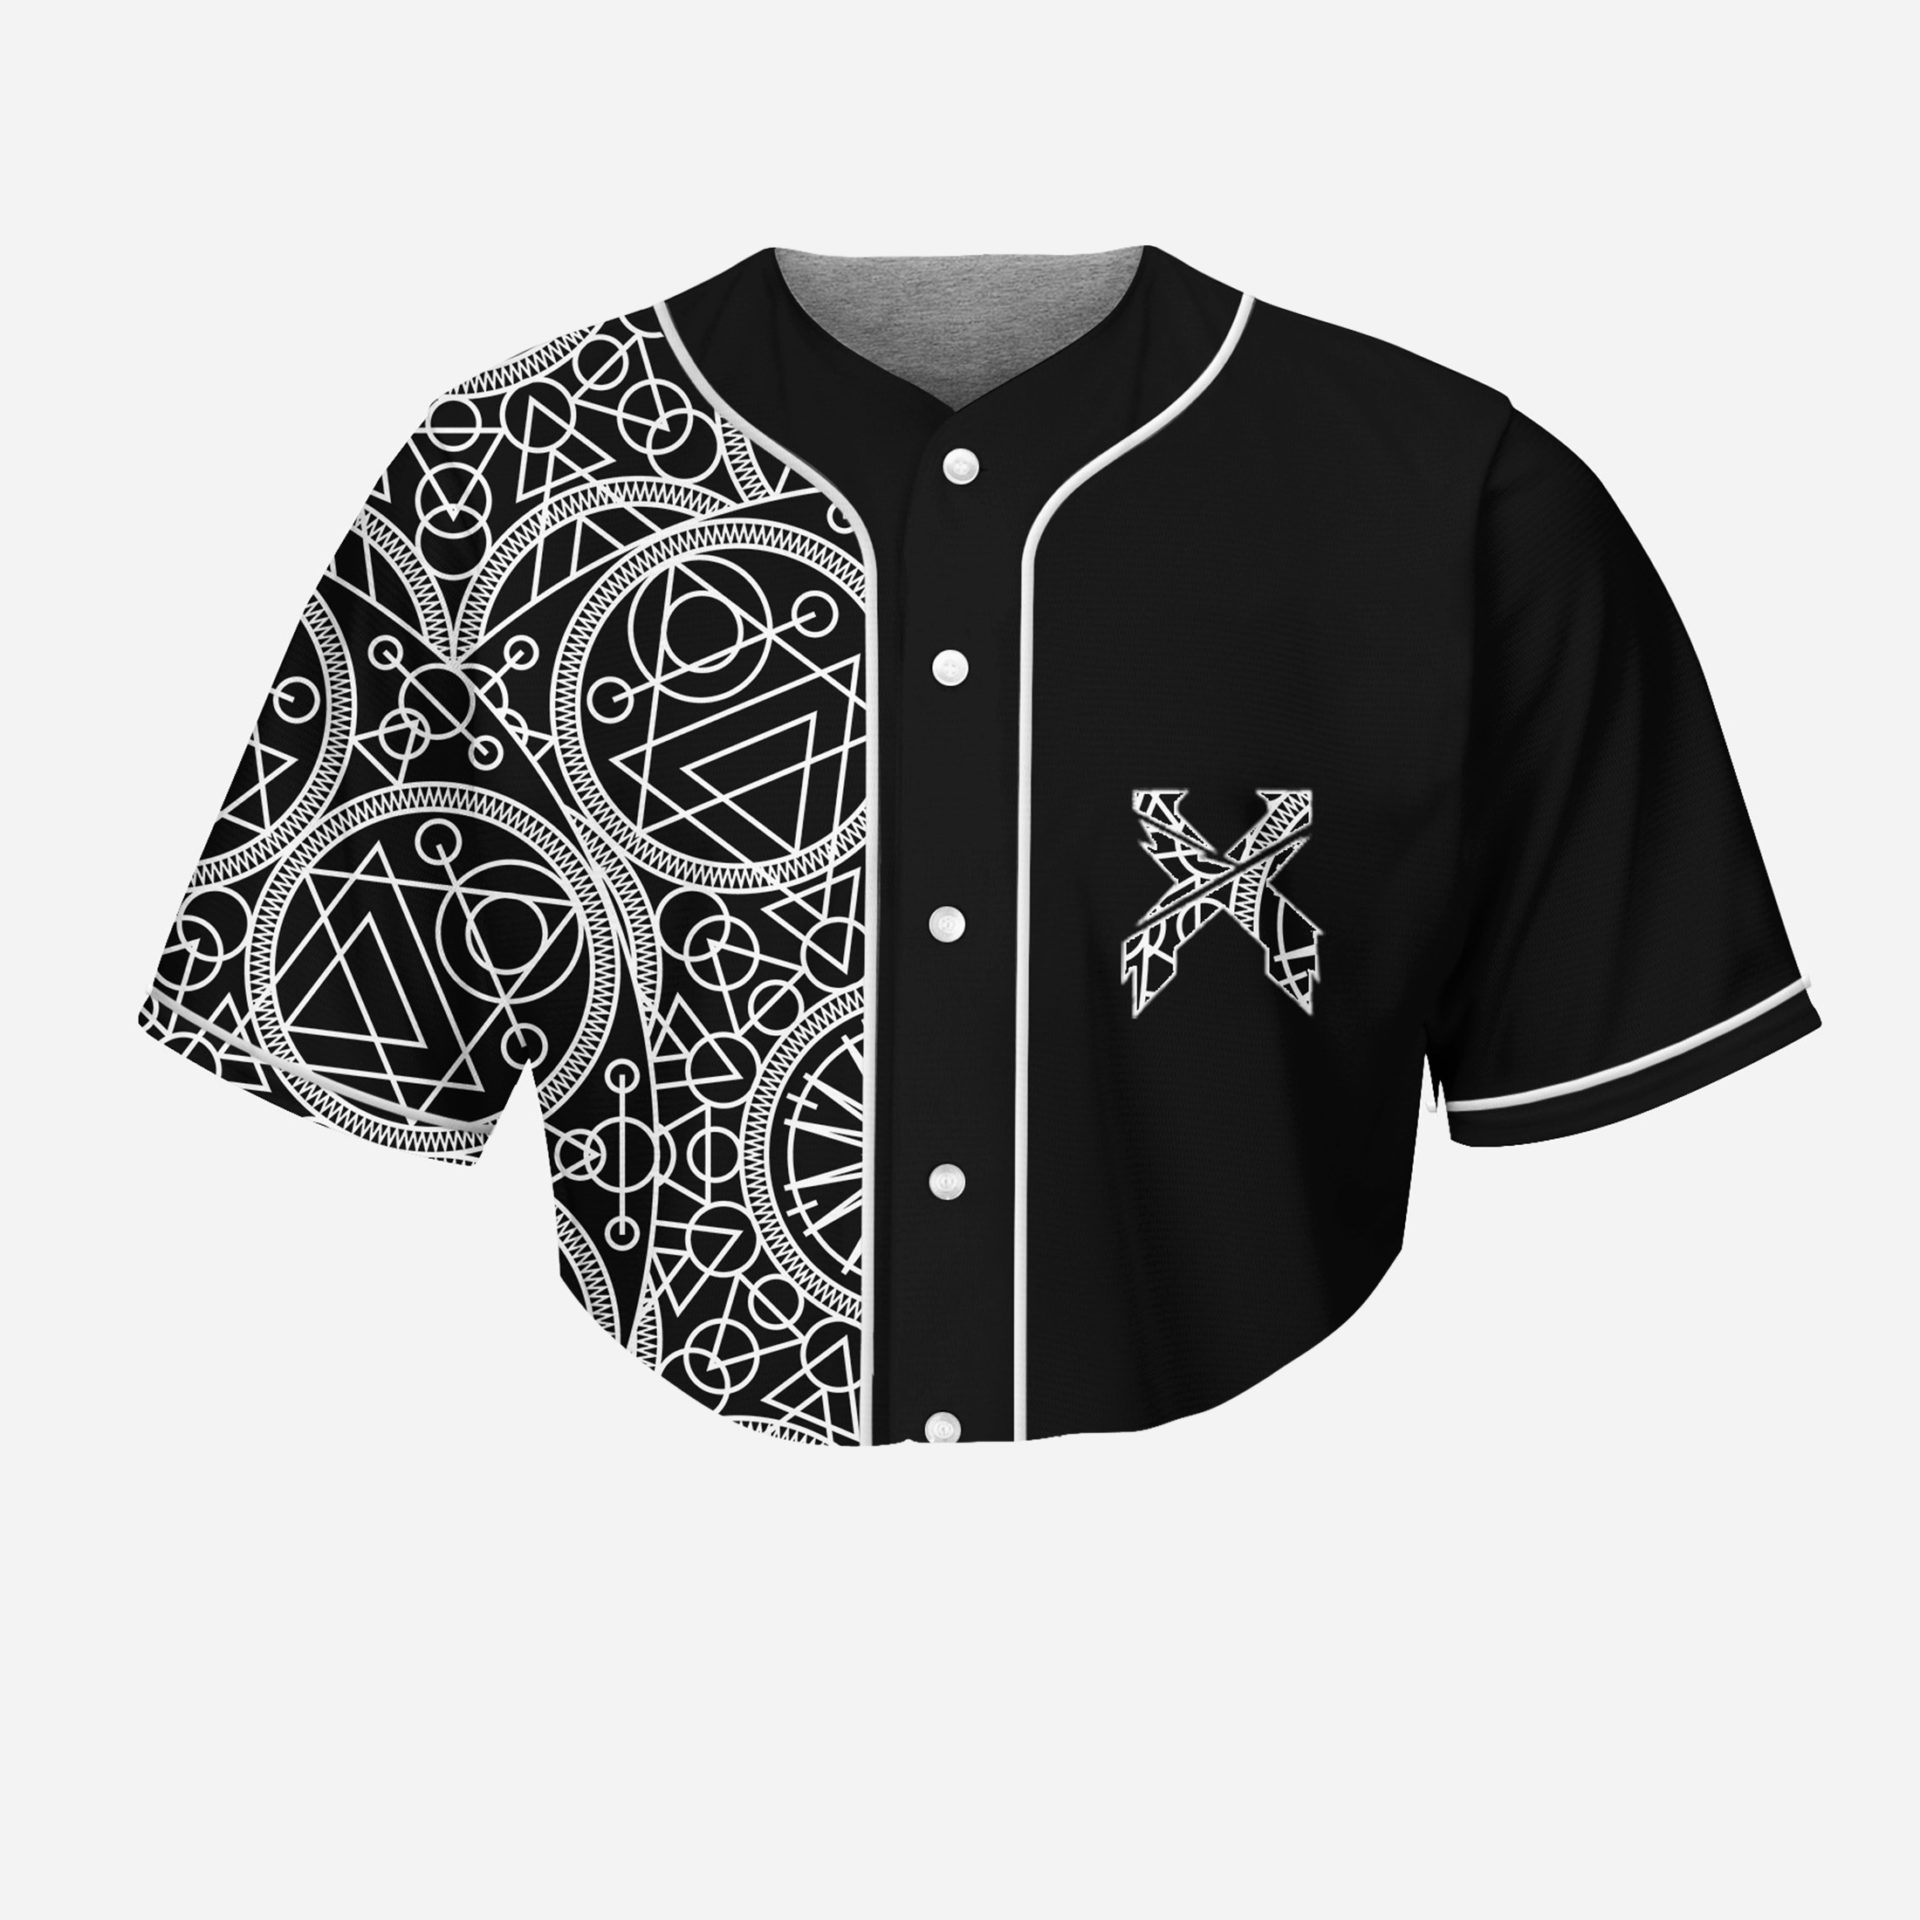 Excision geometric split cool design rave baseball jersey for EDM festivals